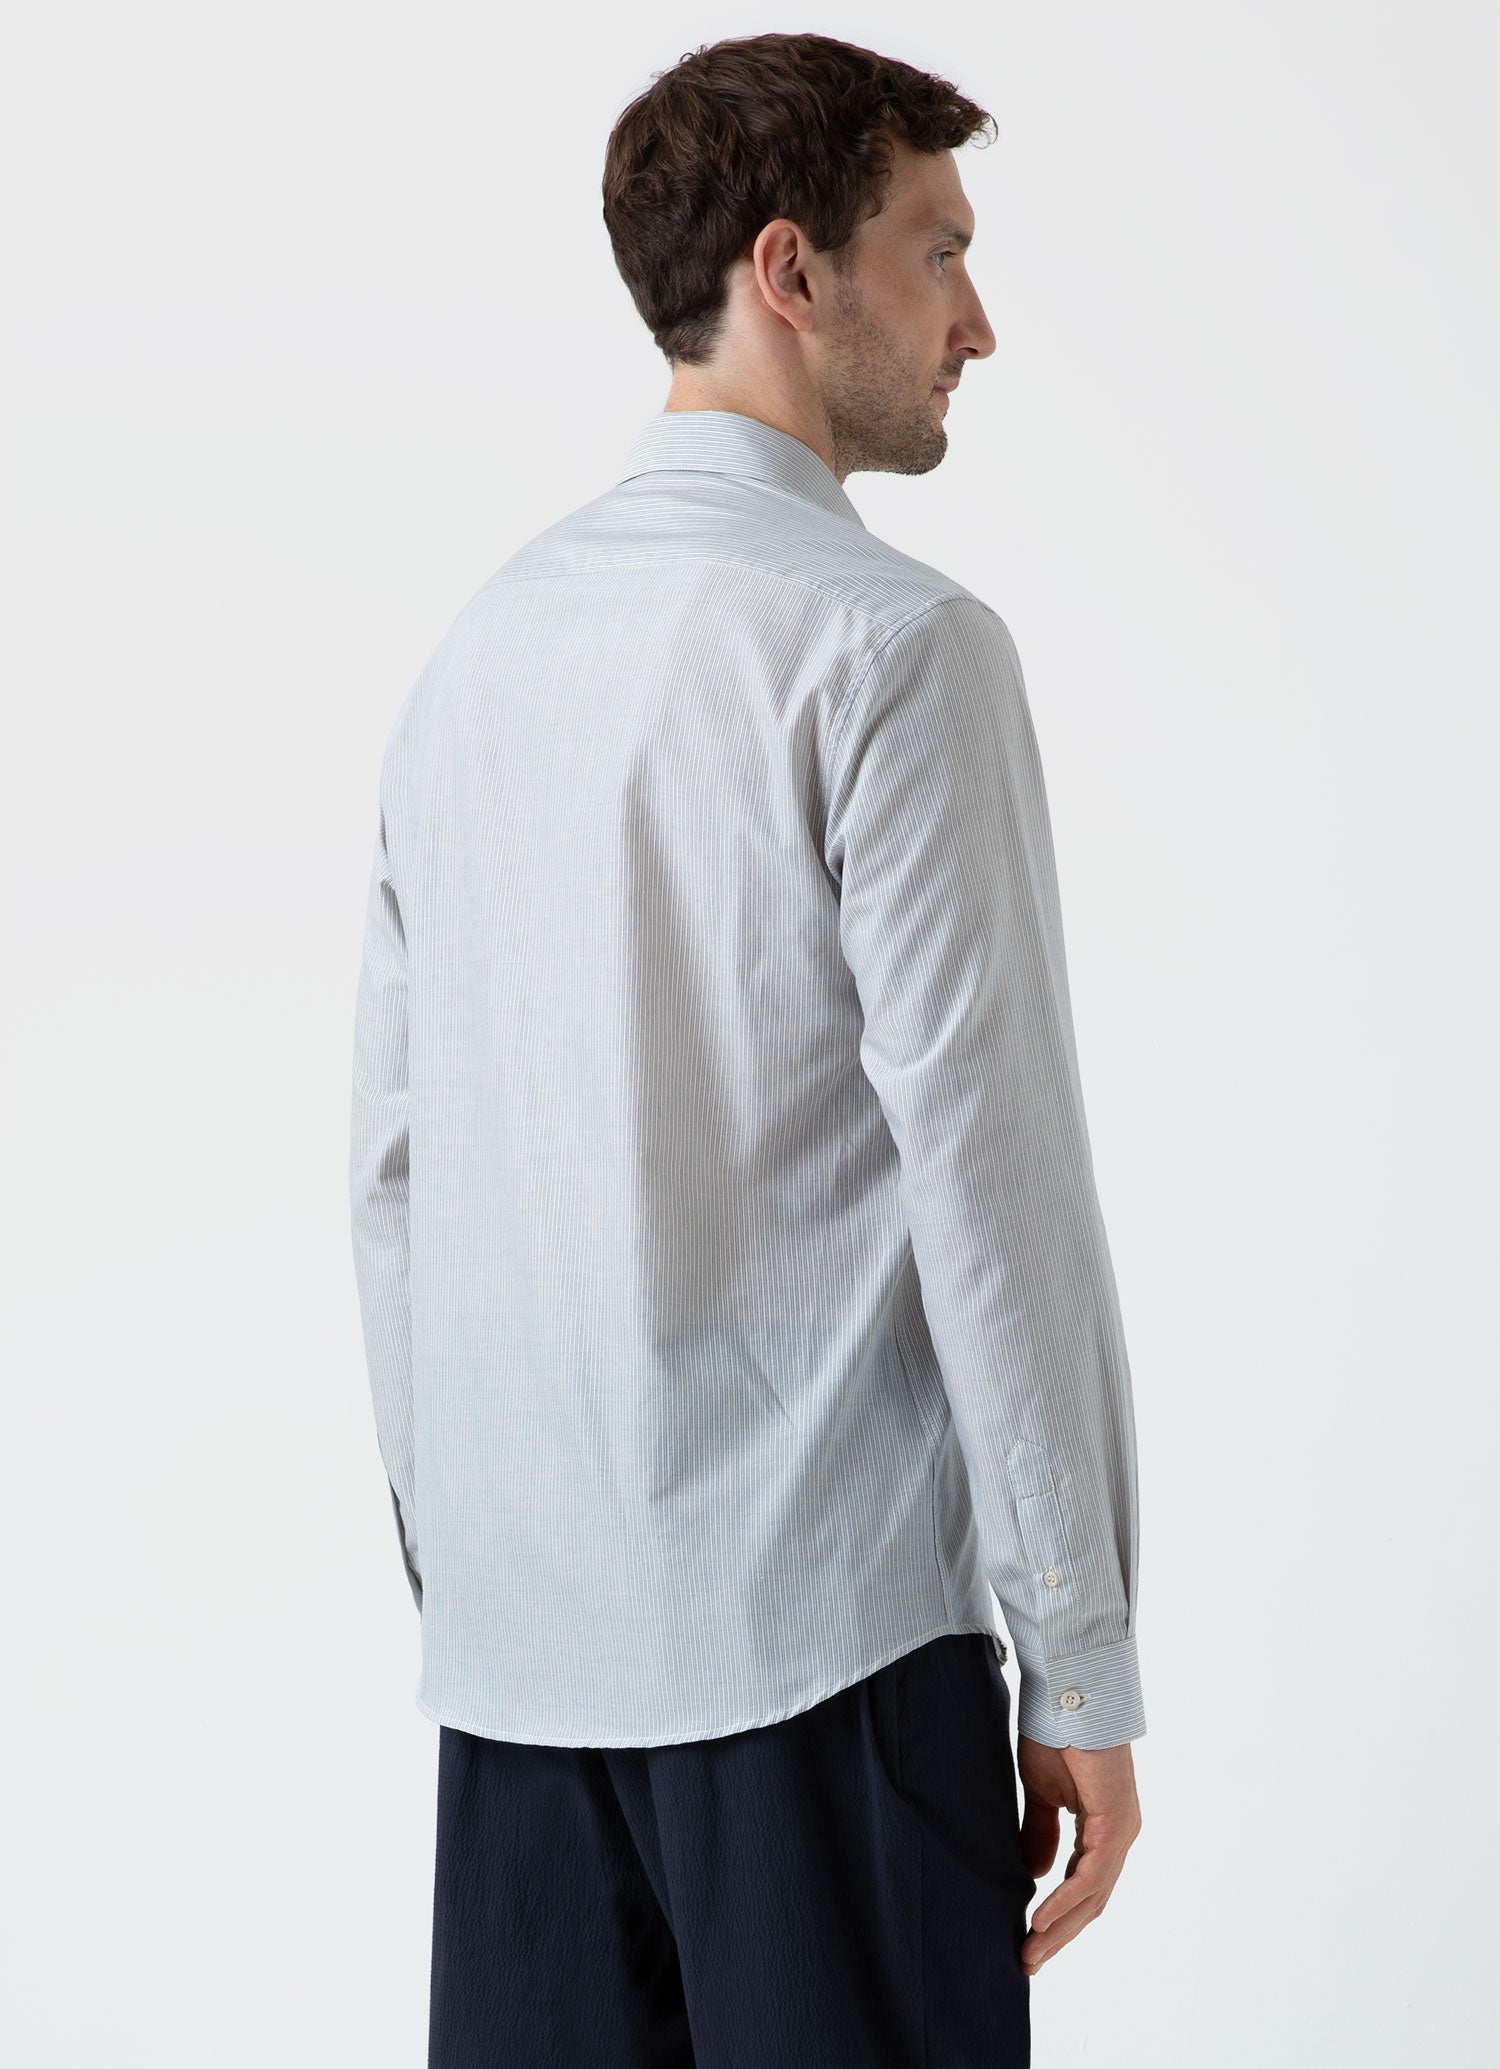 Men's Cotton Cashmere Shirt in Light Blue/White